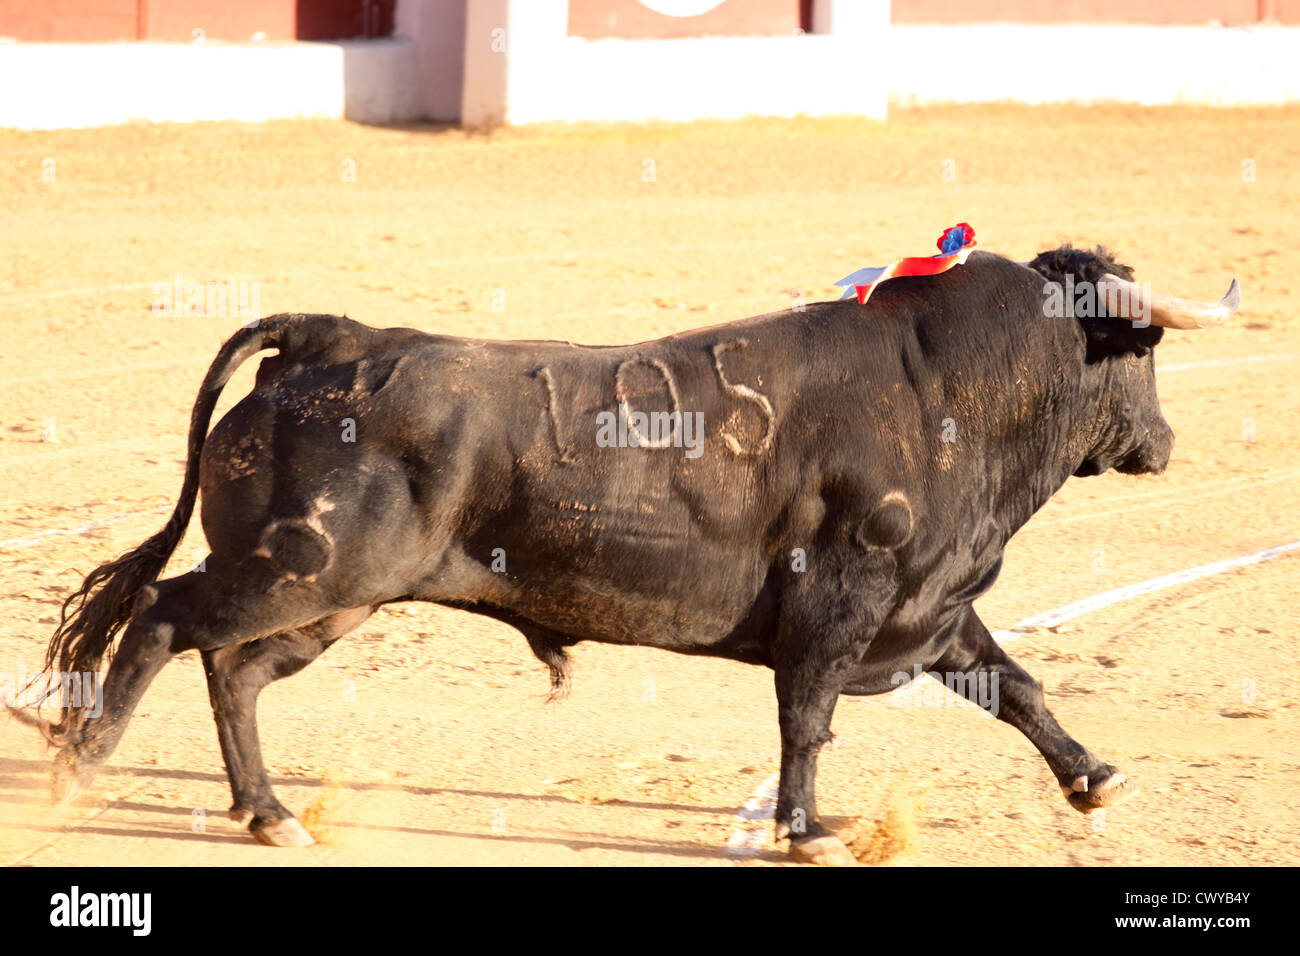 Bullfighting in Spain. 21 July 2012, La Linea de la Concepcion, Spain. Stock Photo